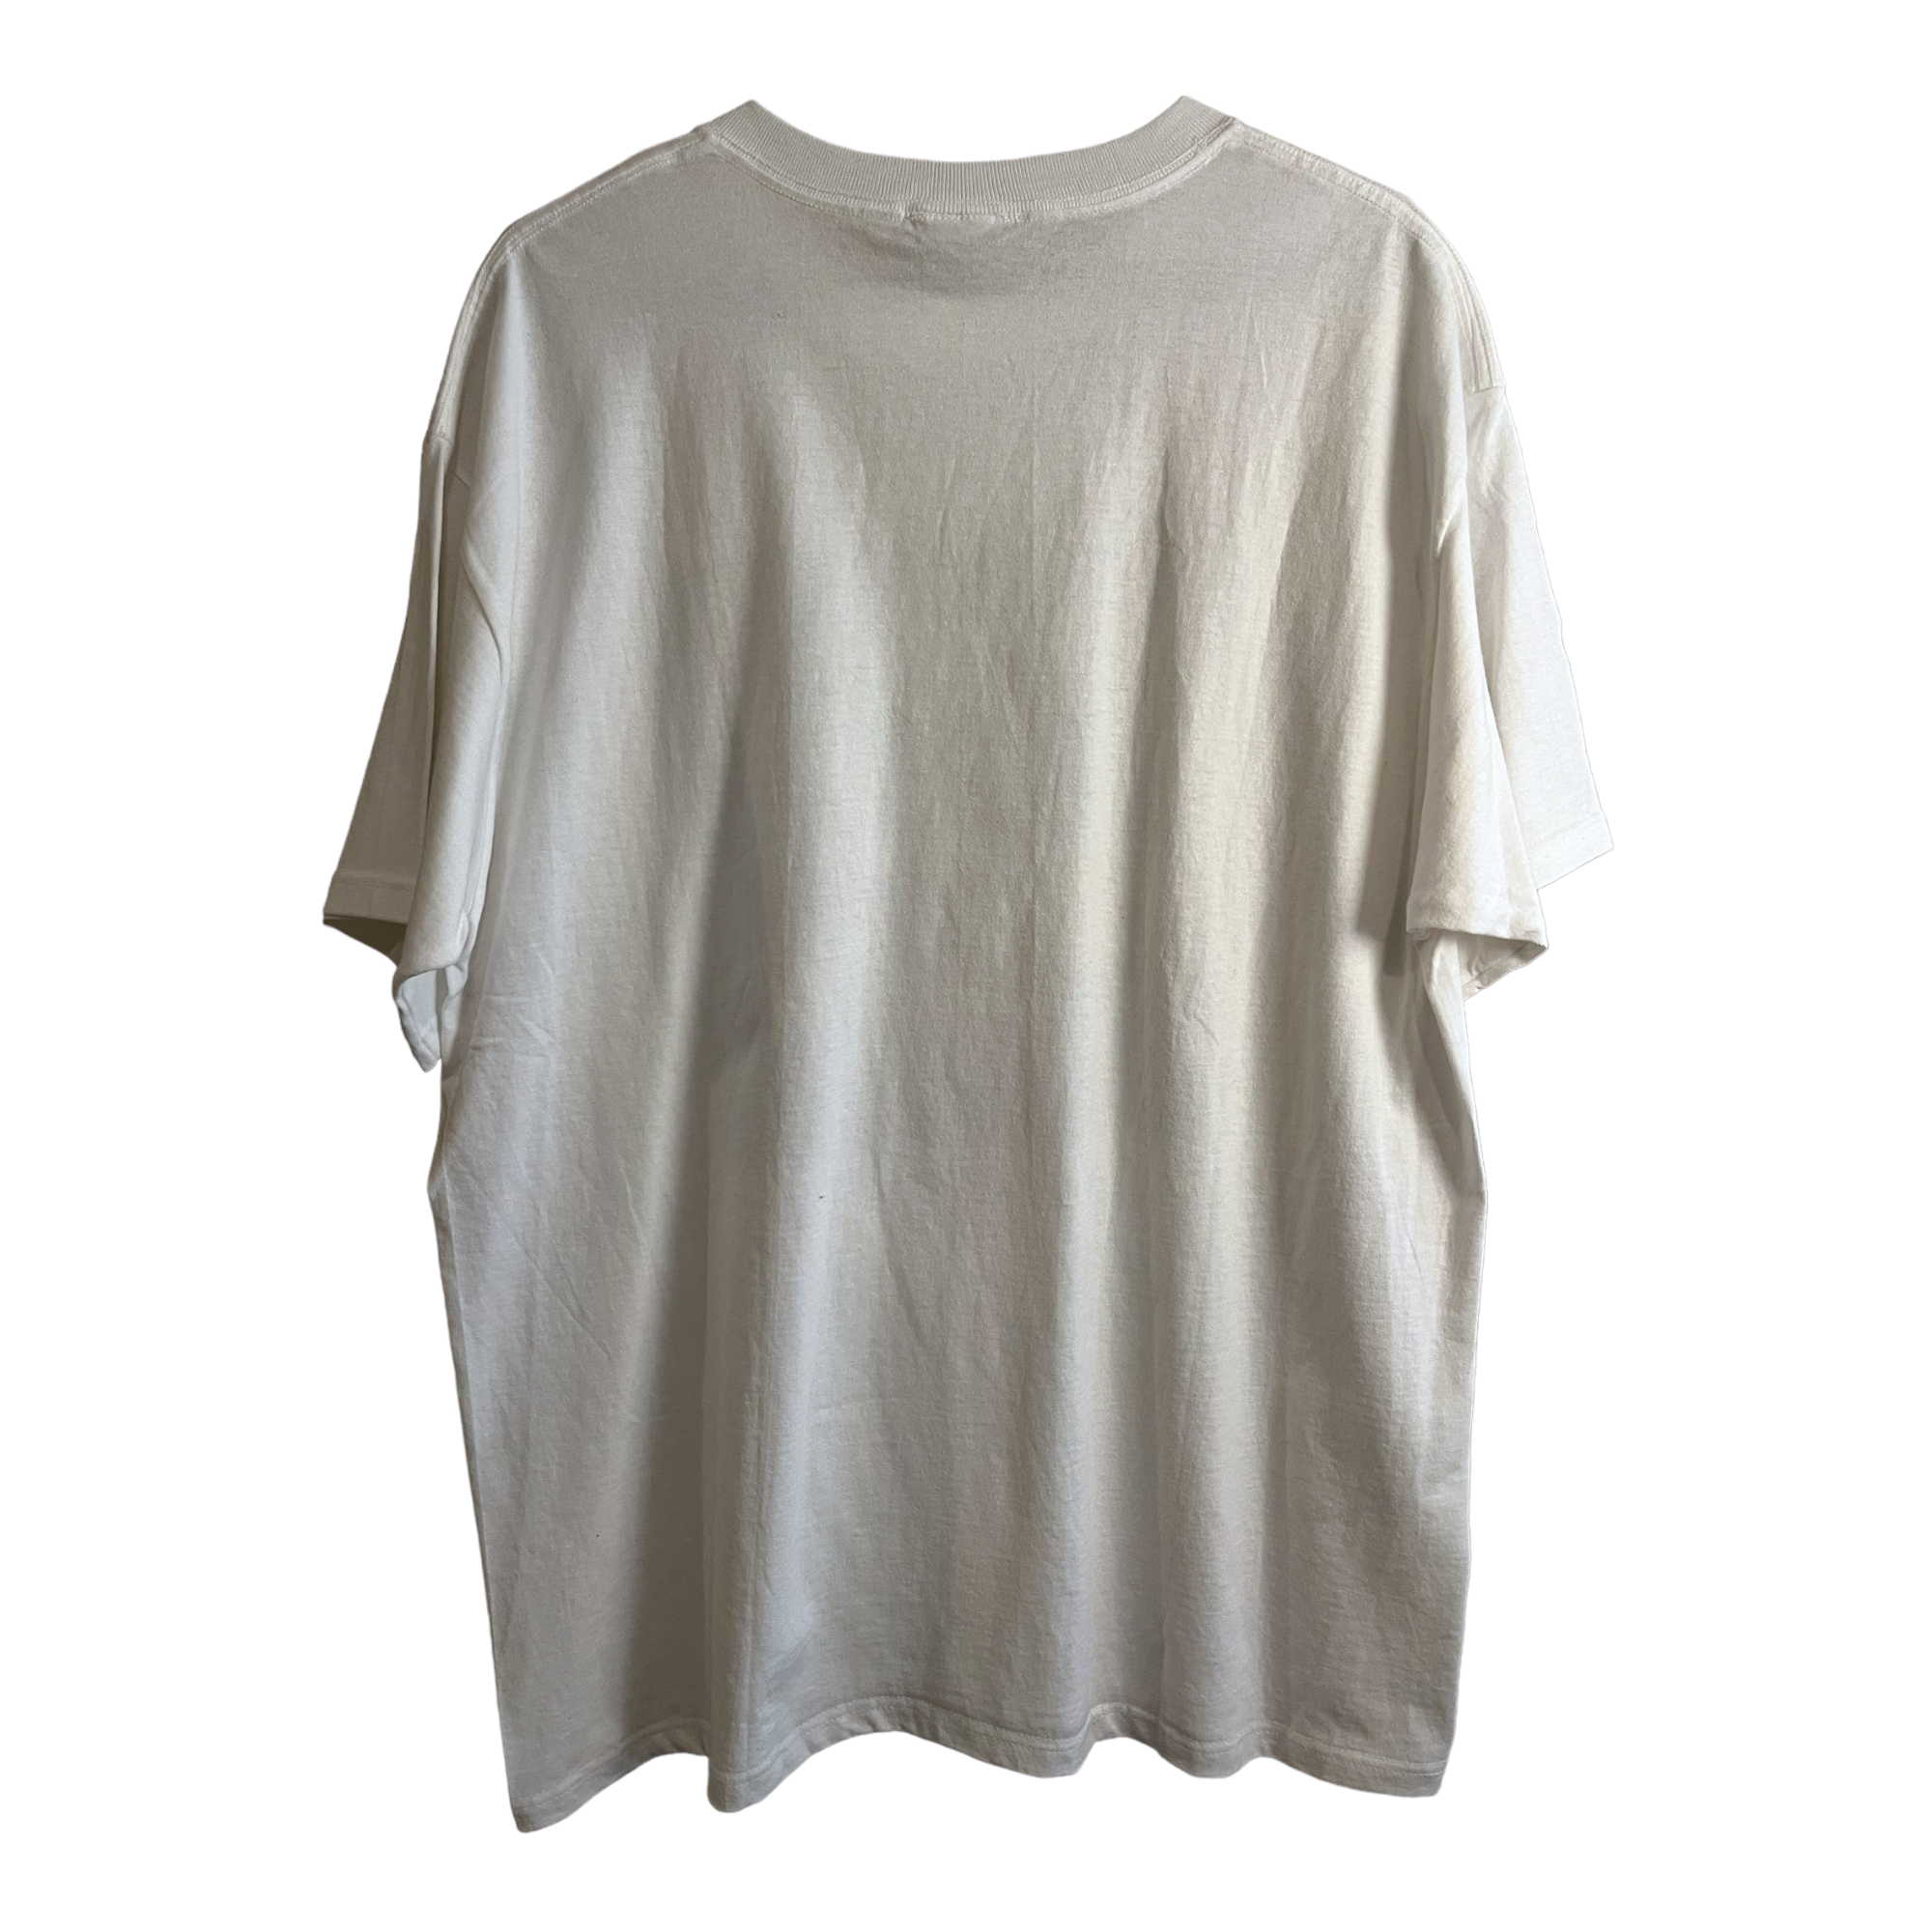 2002 Kandinsky, ‘Several Circles’ Guggenheim Museum T-Shirt Brand New w Tags - White - XL